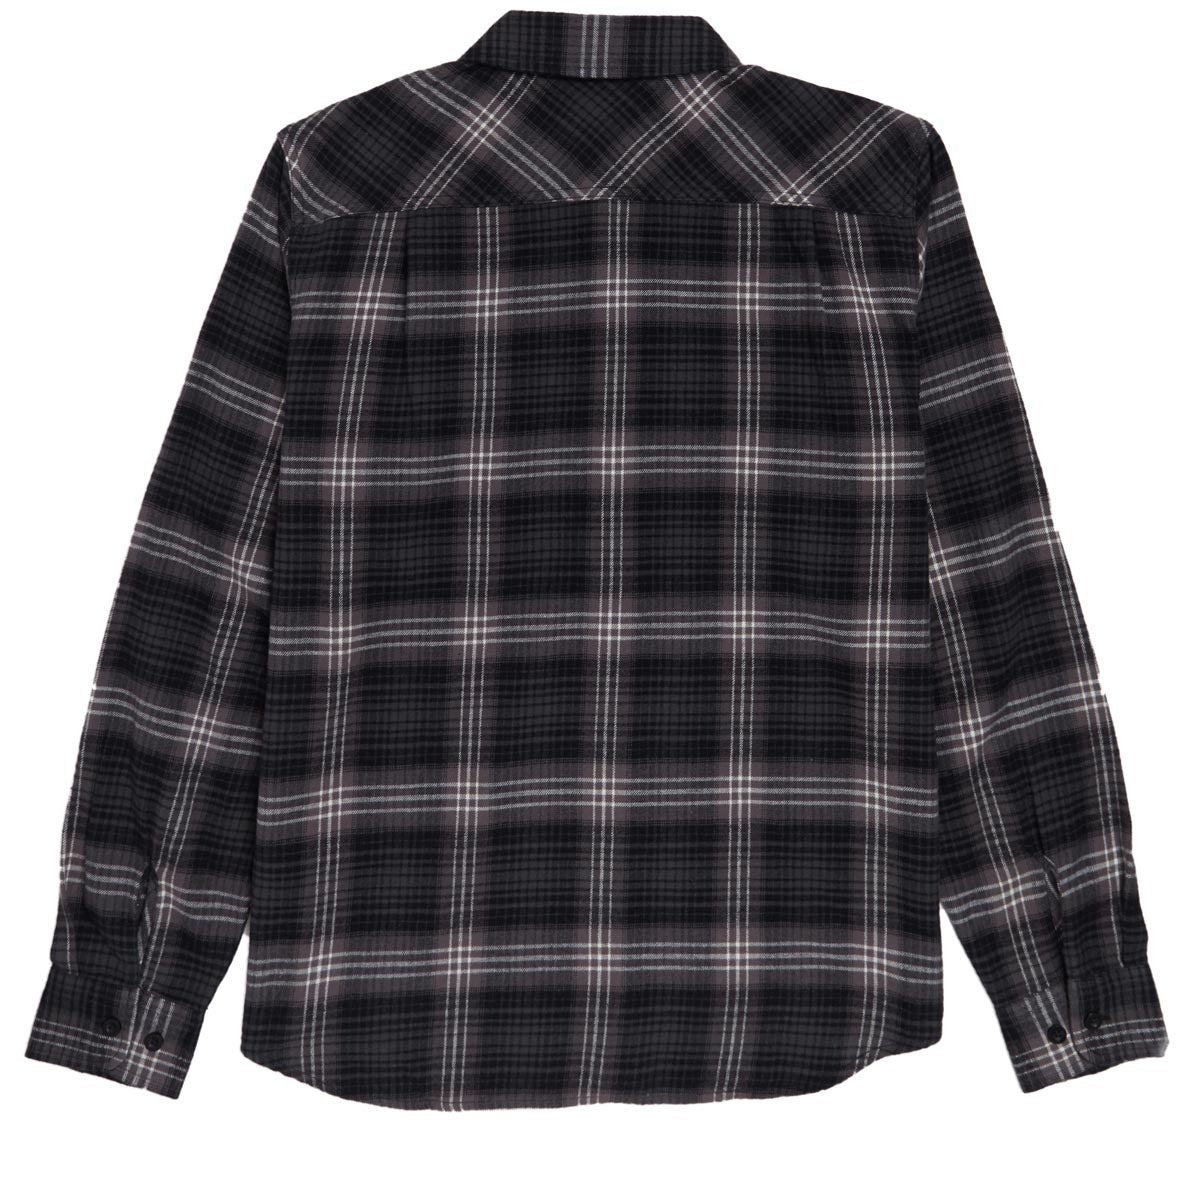 Brixton Bowery Lightweight Ultra Flannel Shirt - Charcoal/Black image 2